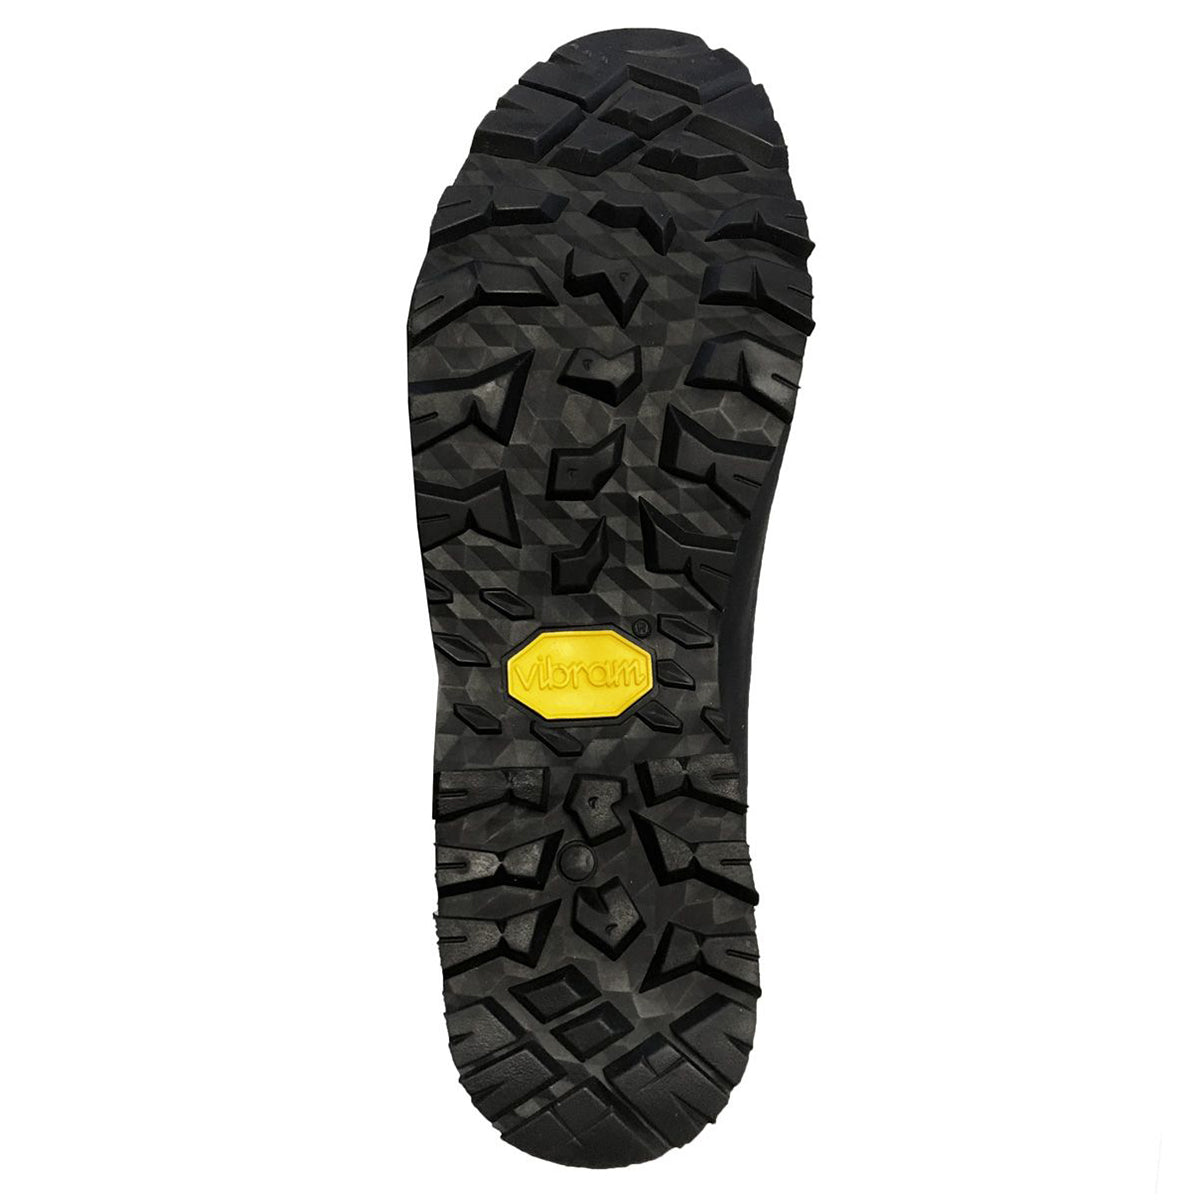 Crispi Briksdal GTX Non-Insulated by Crispi | Footwear - goHUNT Shop